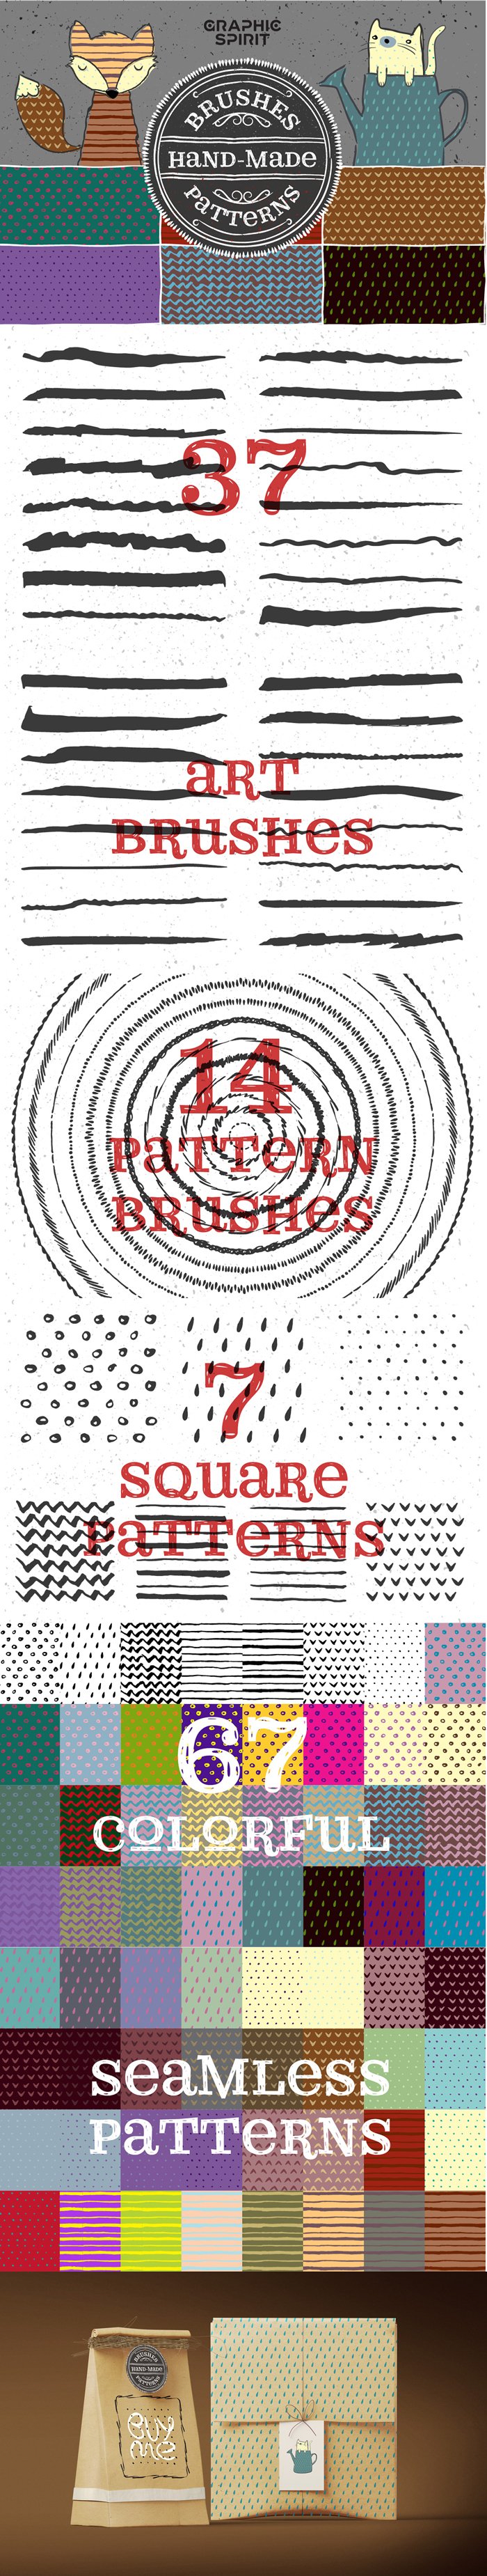 Hand-Made-Brushes-_-Patterns-700-big.jpg